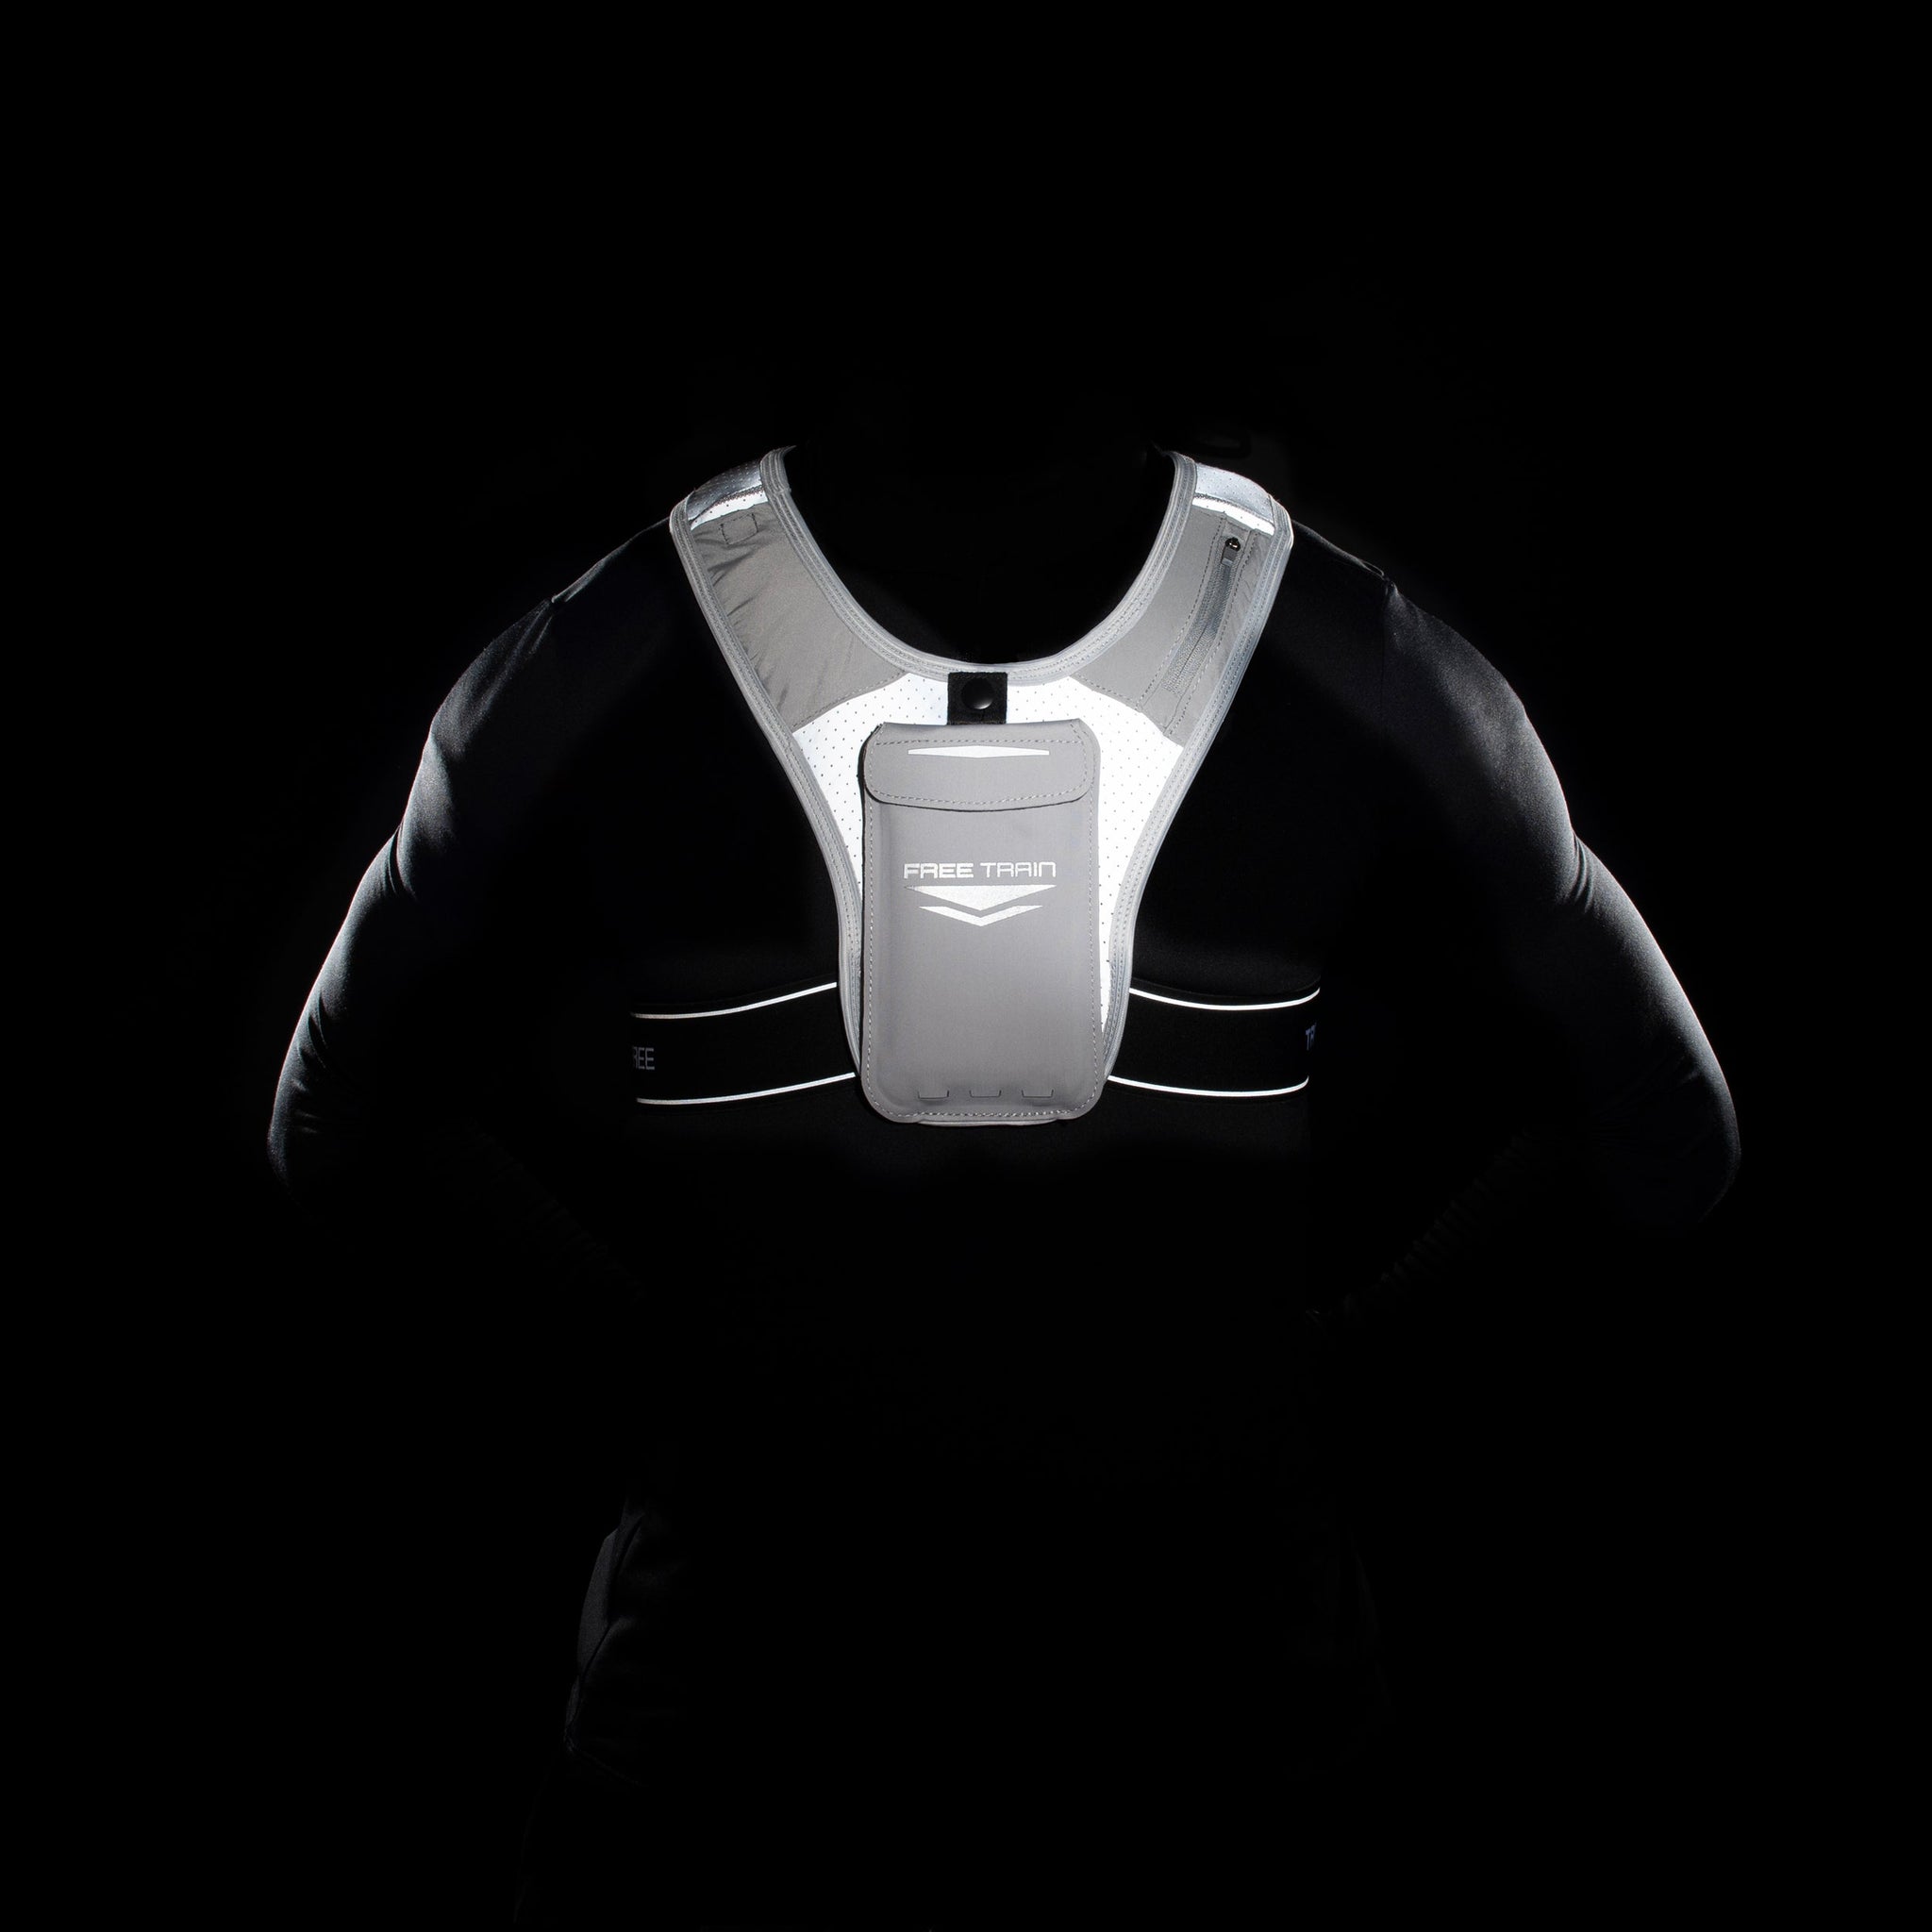 Lightweight running vest with pockets